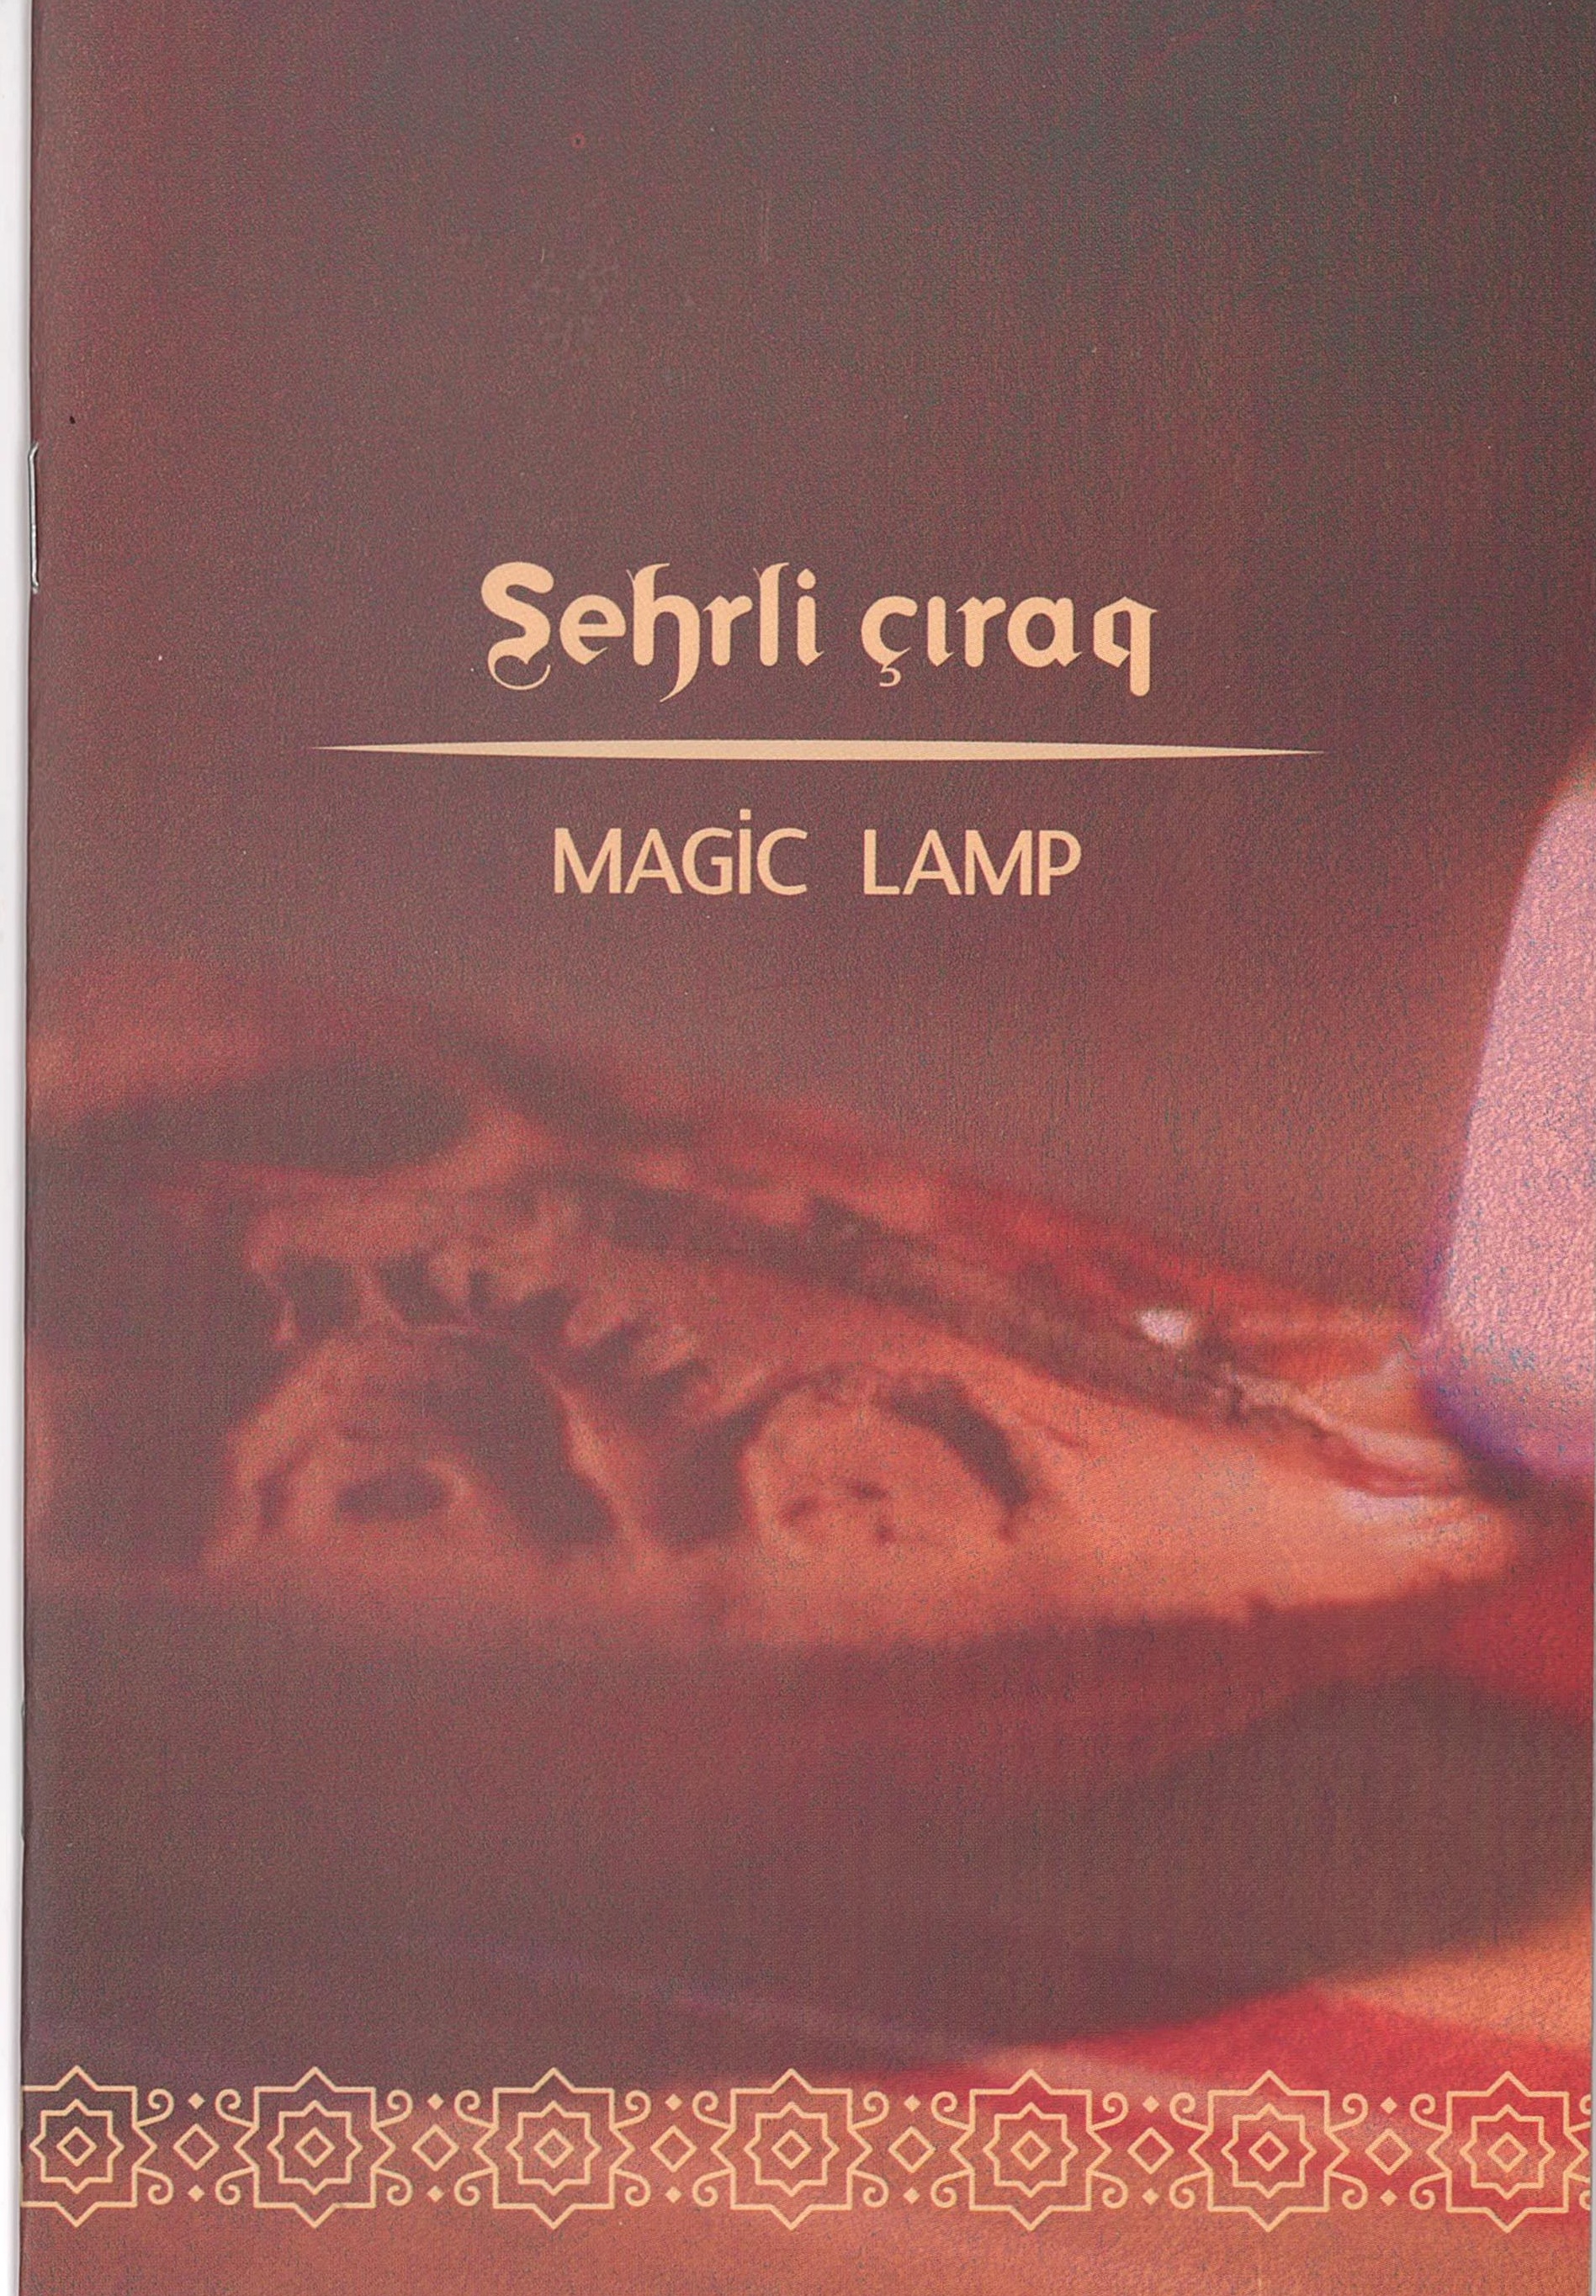  Magic lamp